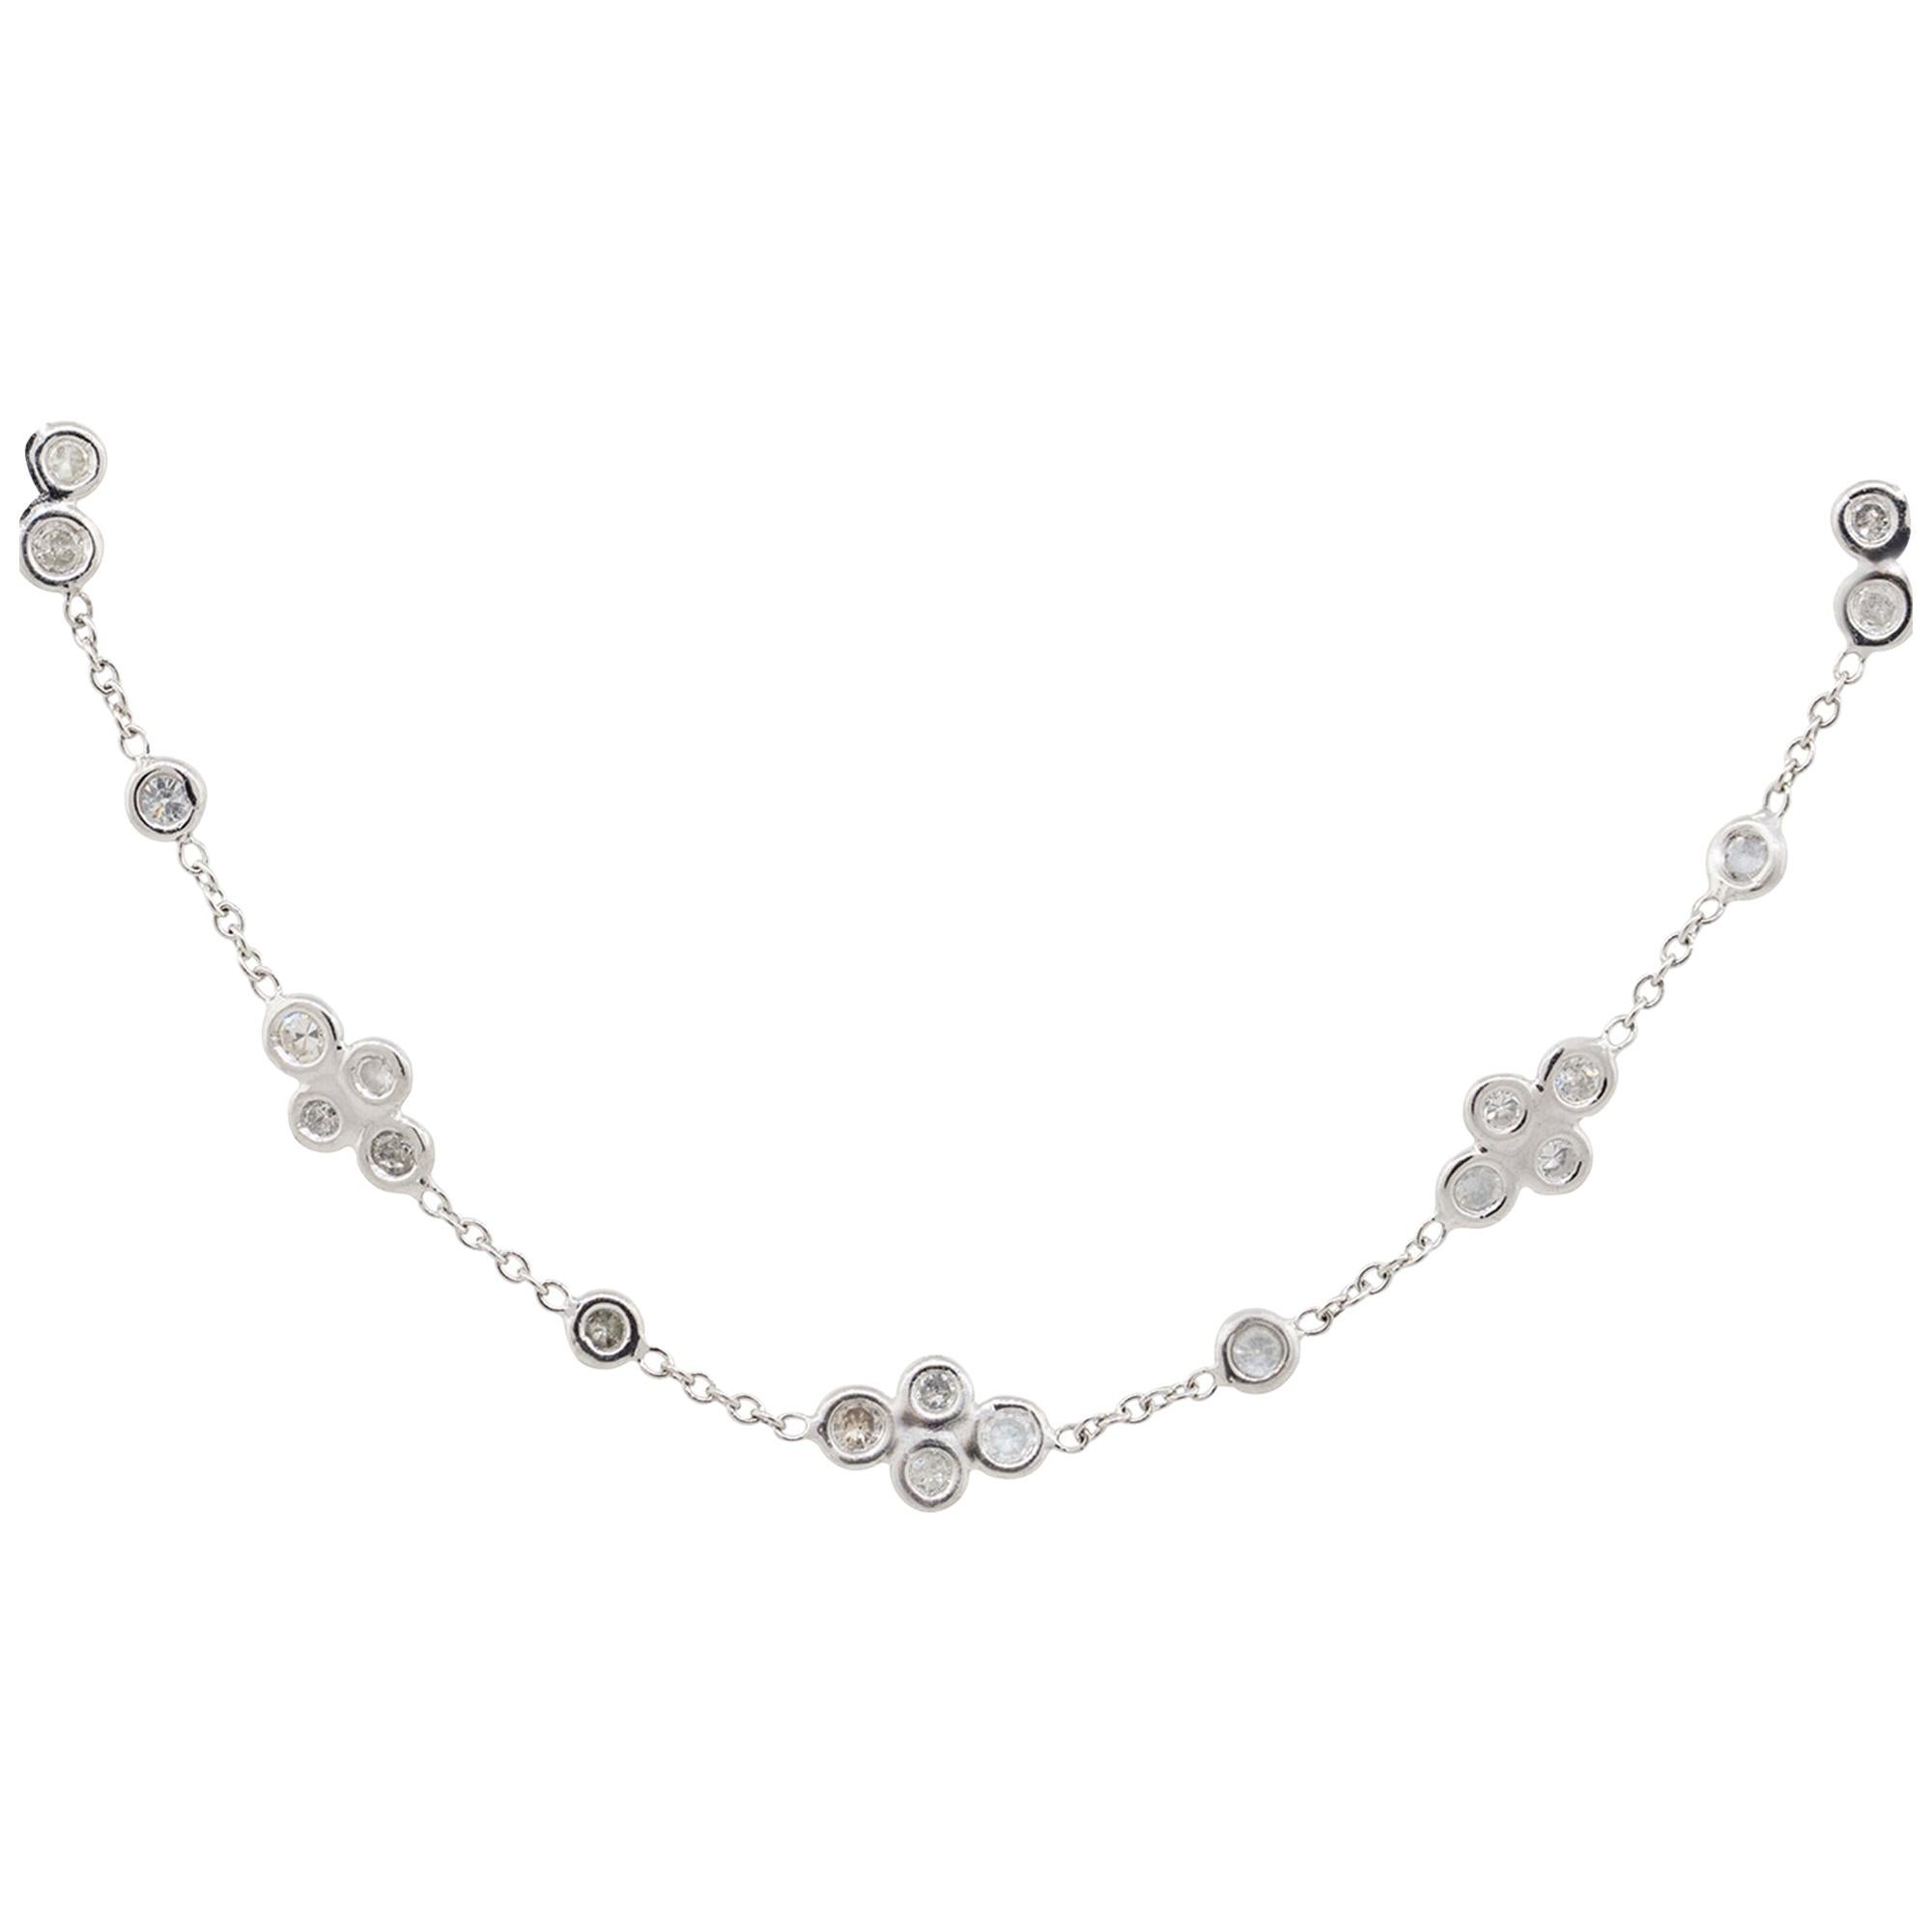 1.9 Carat Round Diamond Floral Necklace 18 Karat in Stock